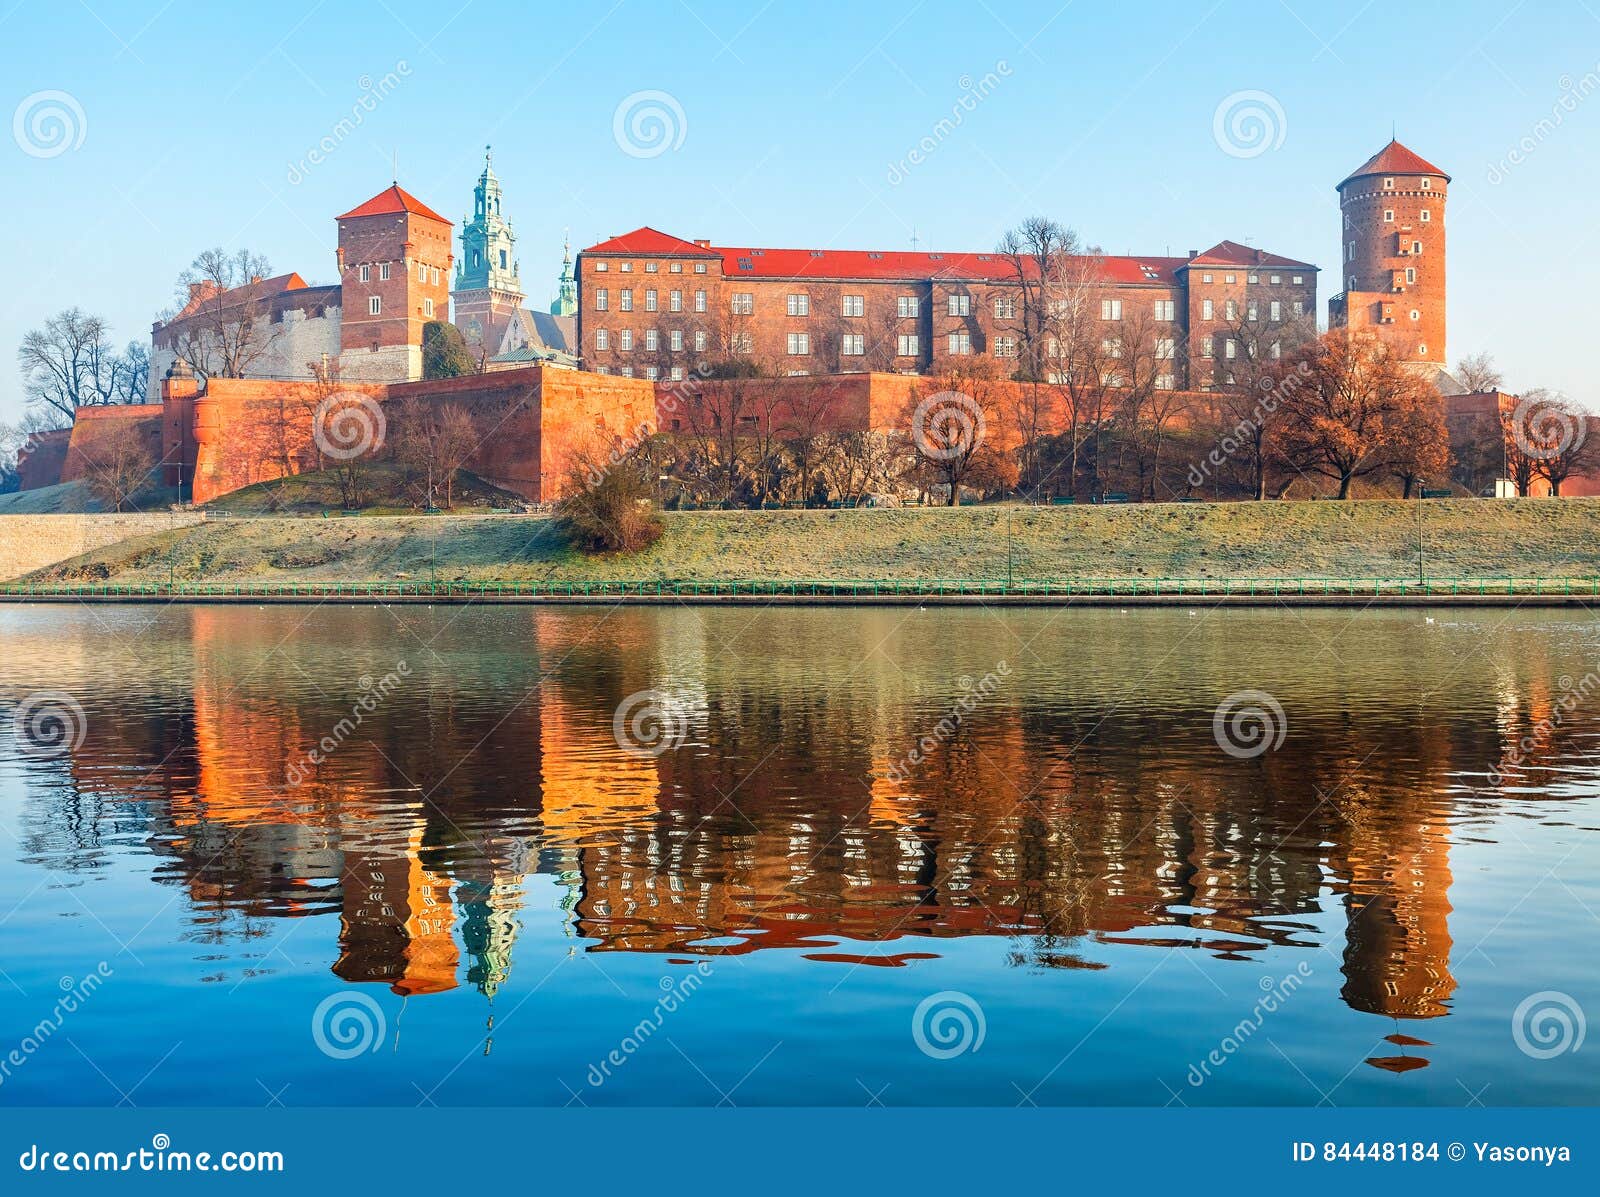 wawel castle at wisla river banks in krakow old town poland